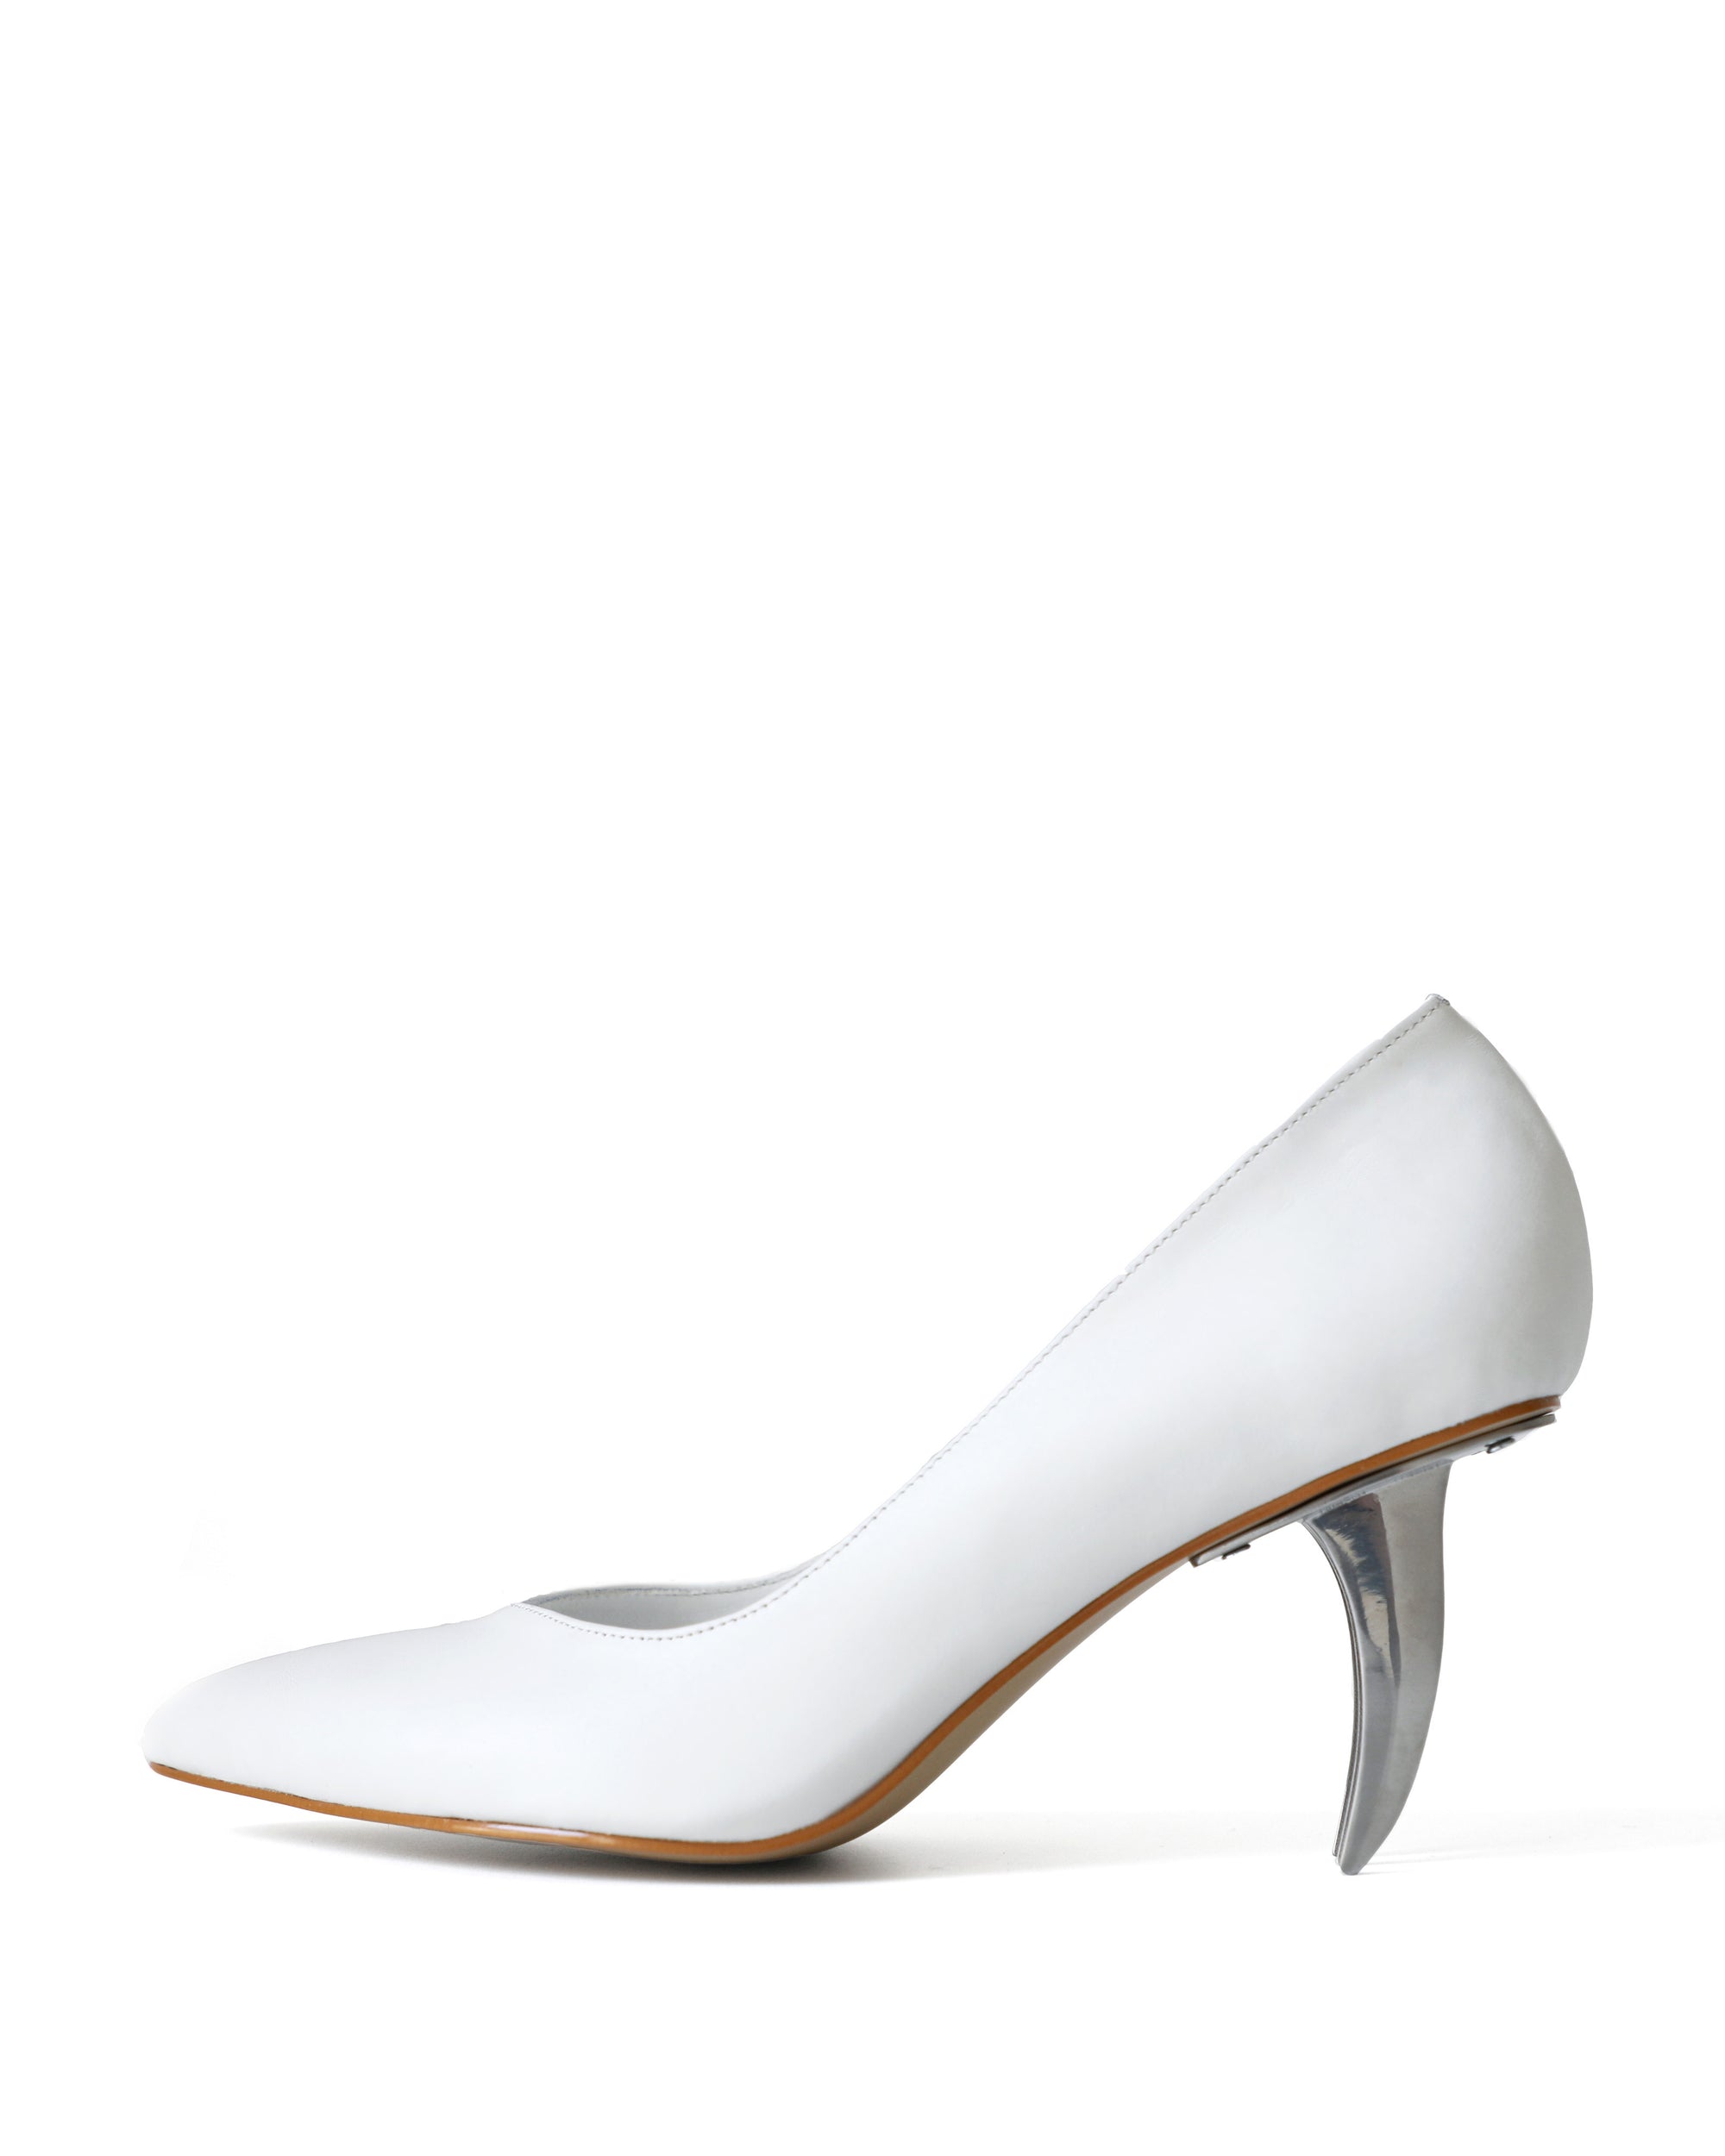 White Blade Heels - RIVERPEACE.CO Women's High Heels - Front